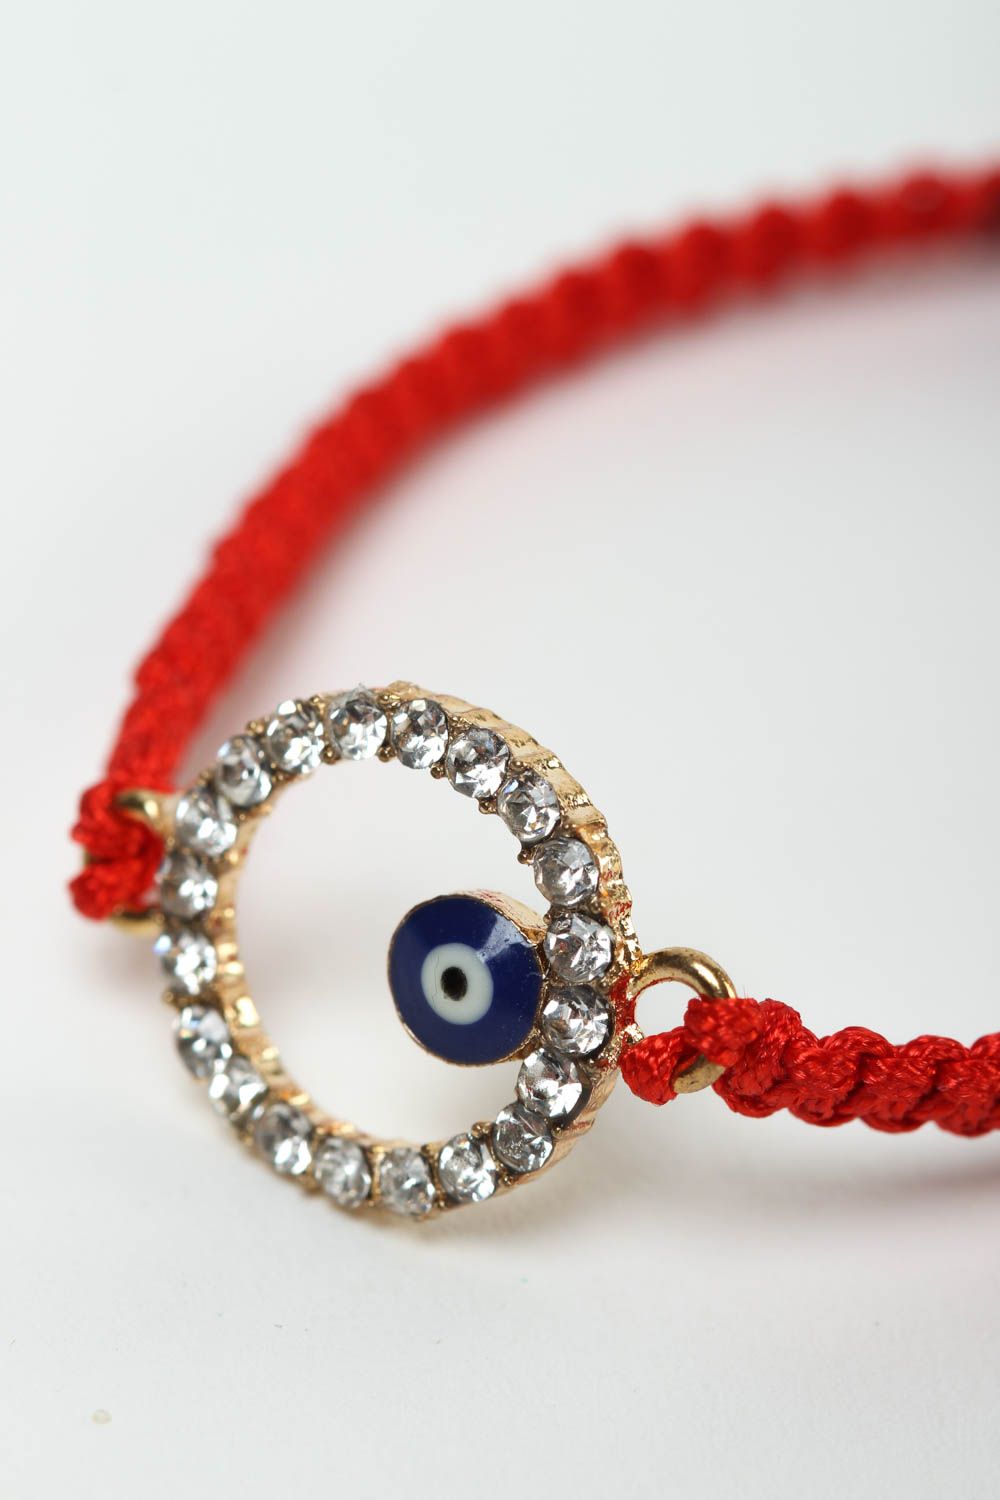 Beautiful handmade friendship bracelet artisan jewelry designs fashion trends photo 3